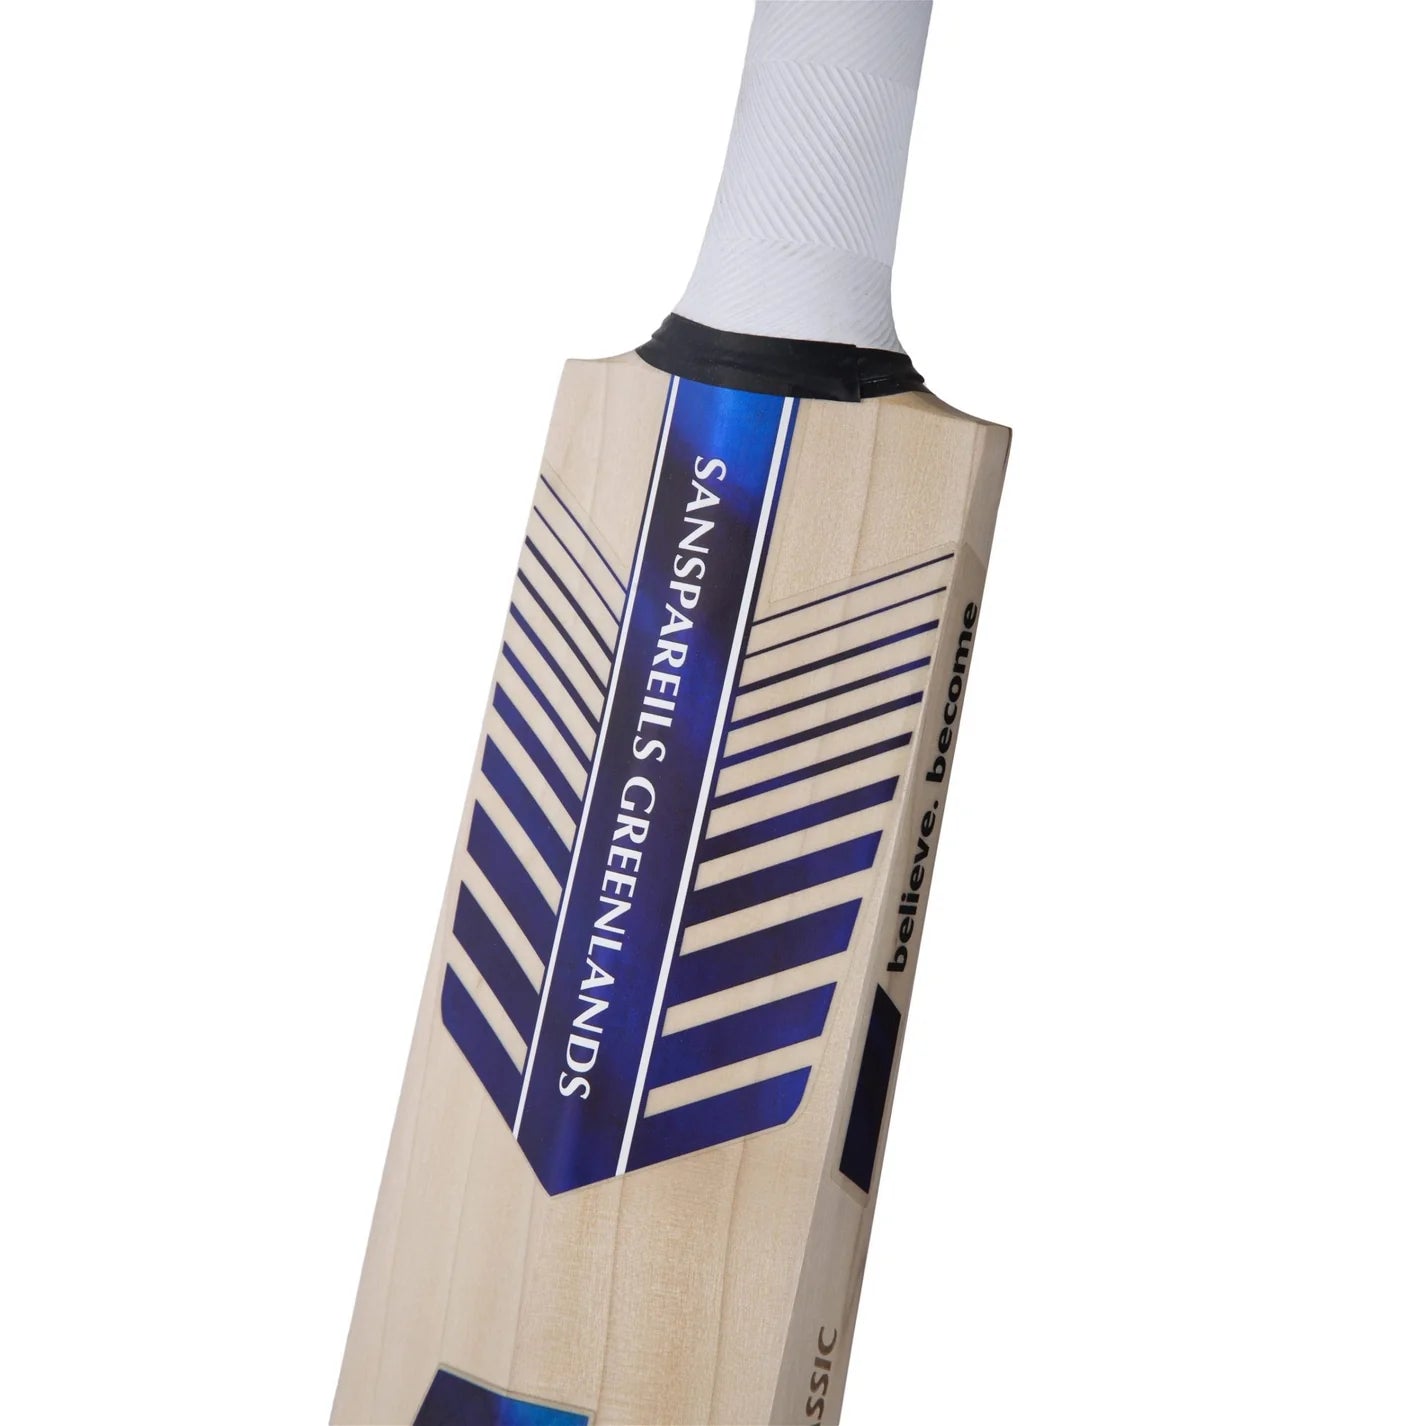 SG Slammer Classic Traditionally Shaped English Willow Cricket Bat